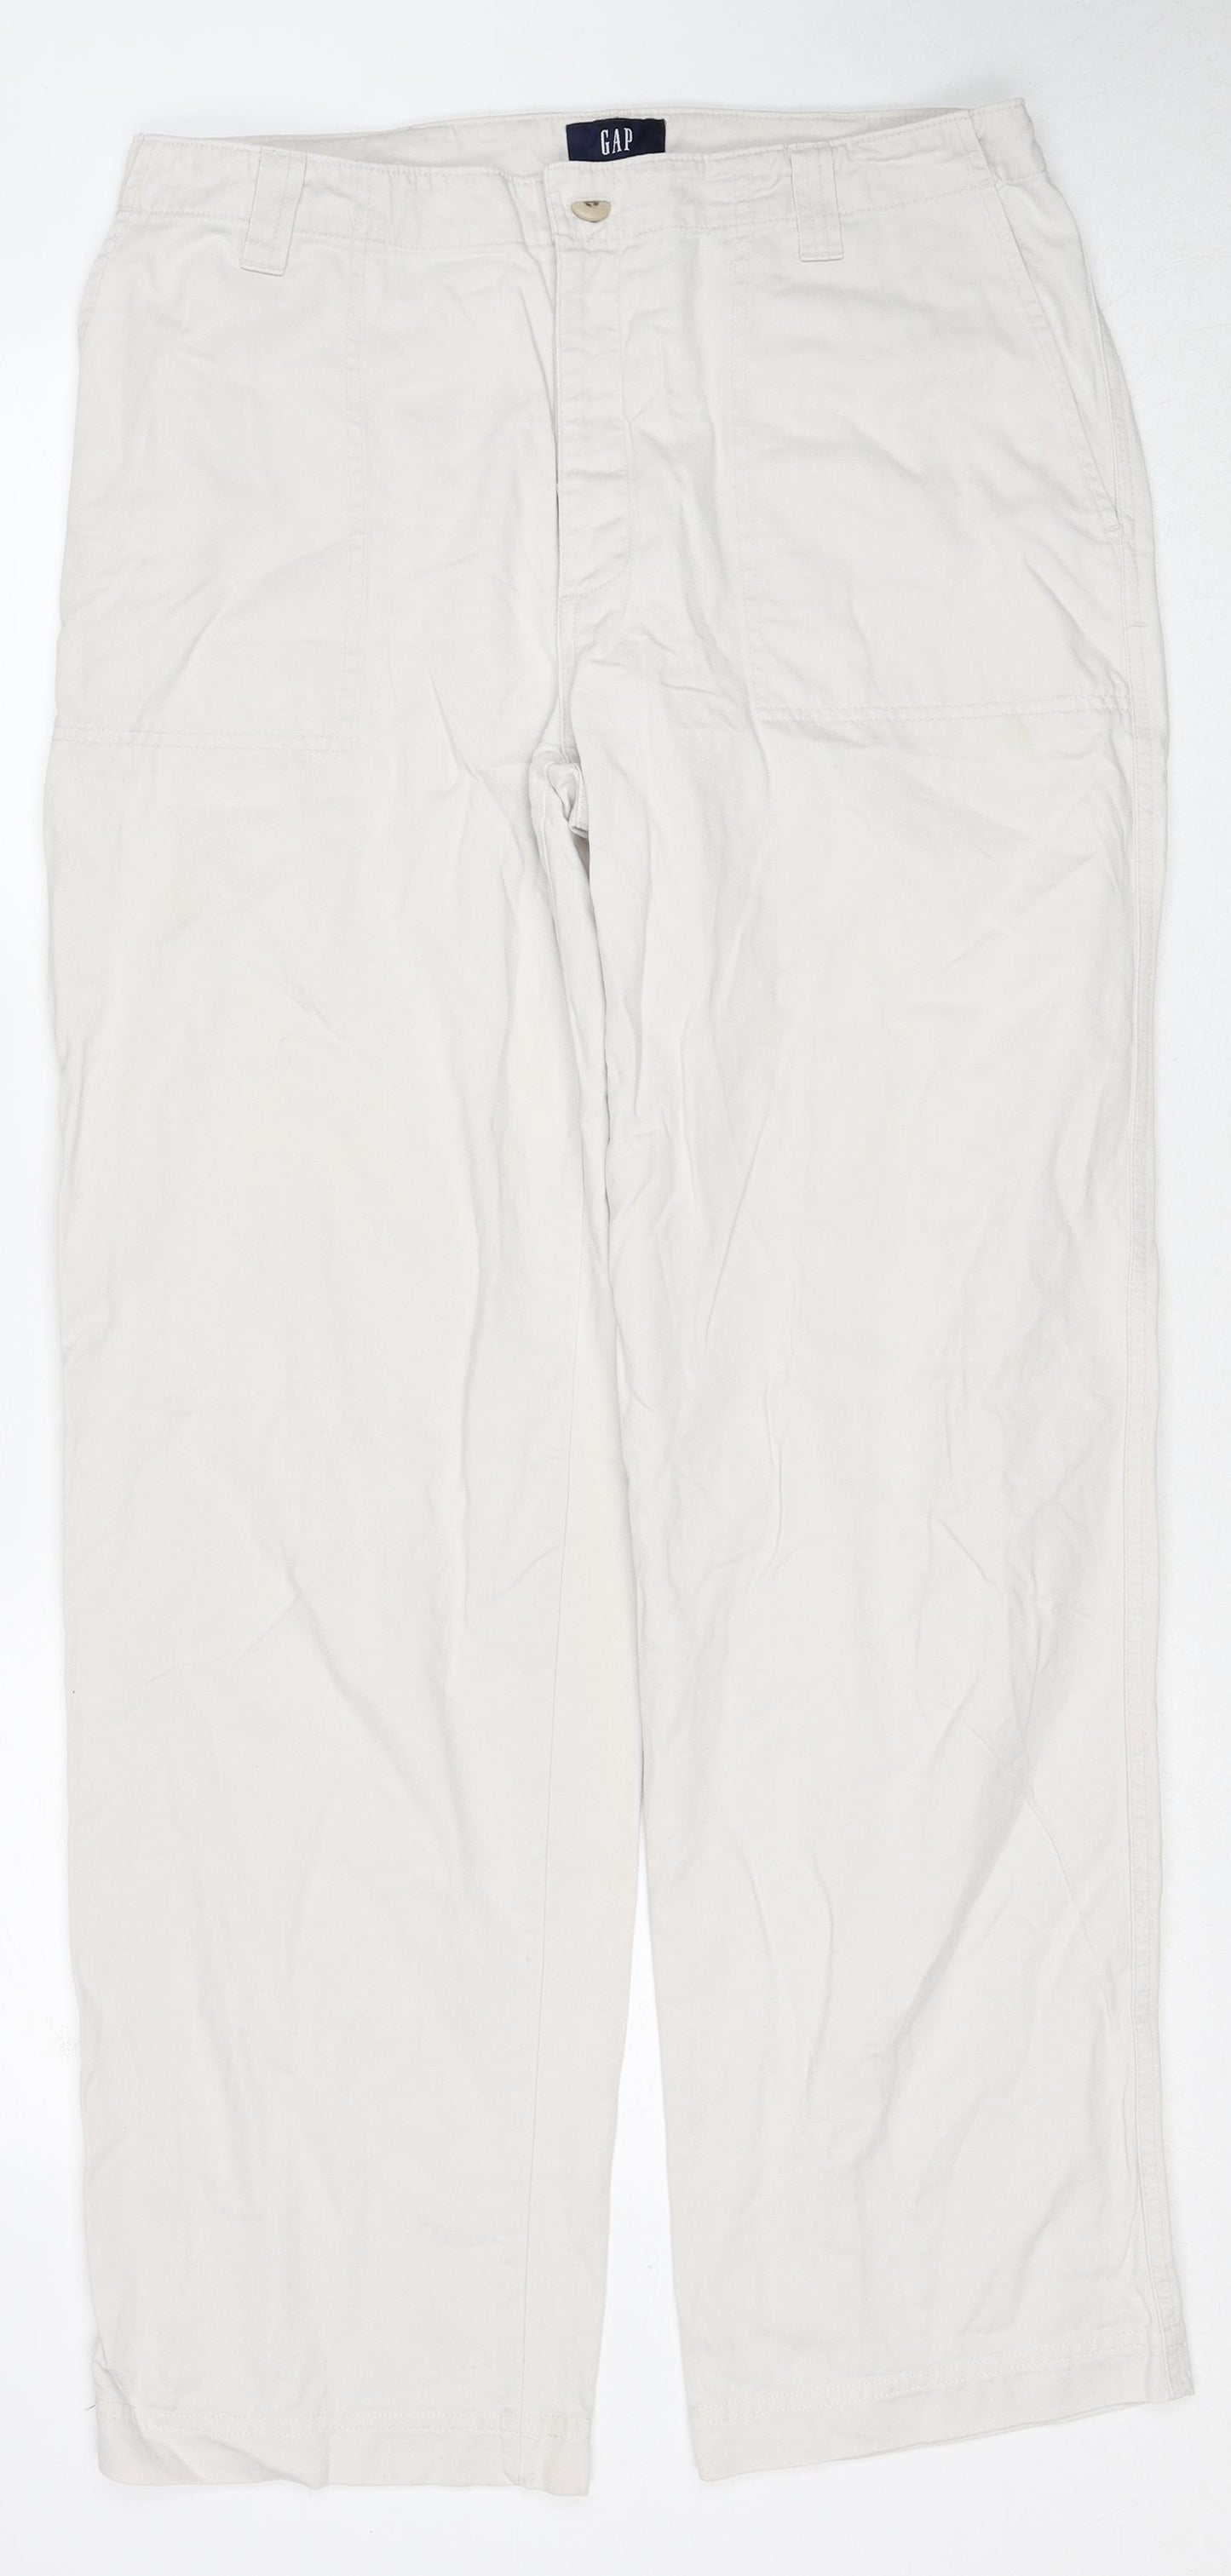 Gap Womens Beige Cotton Trousers Size 12 Regular Button